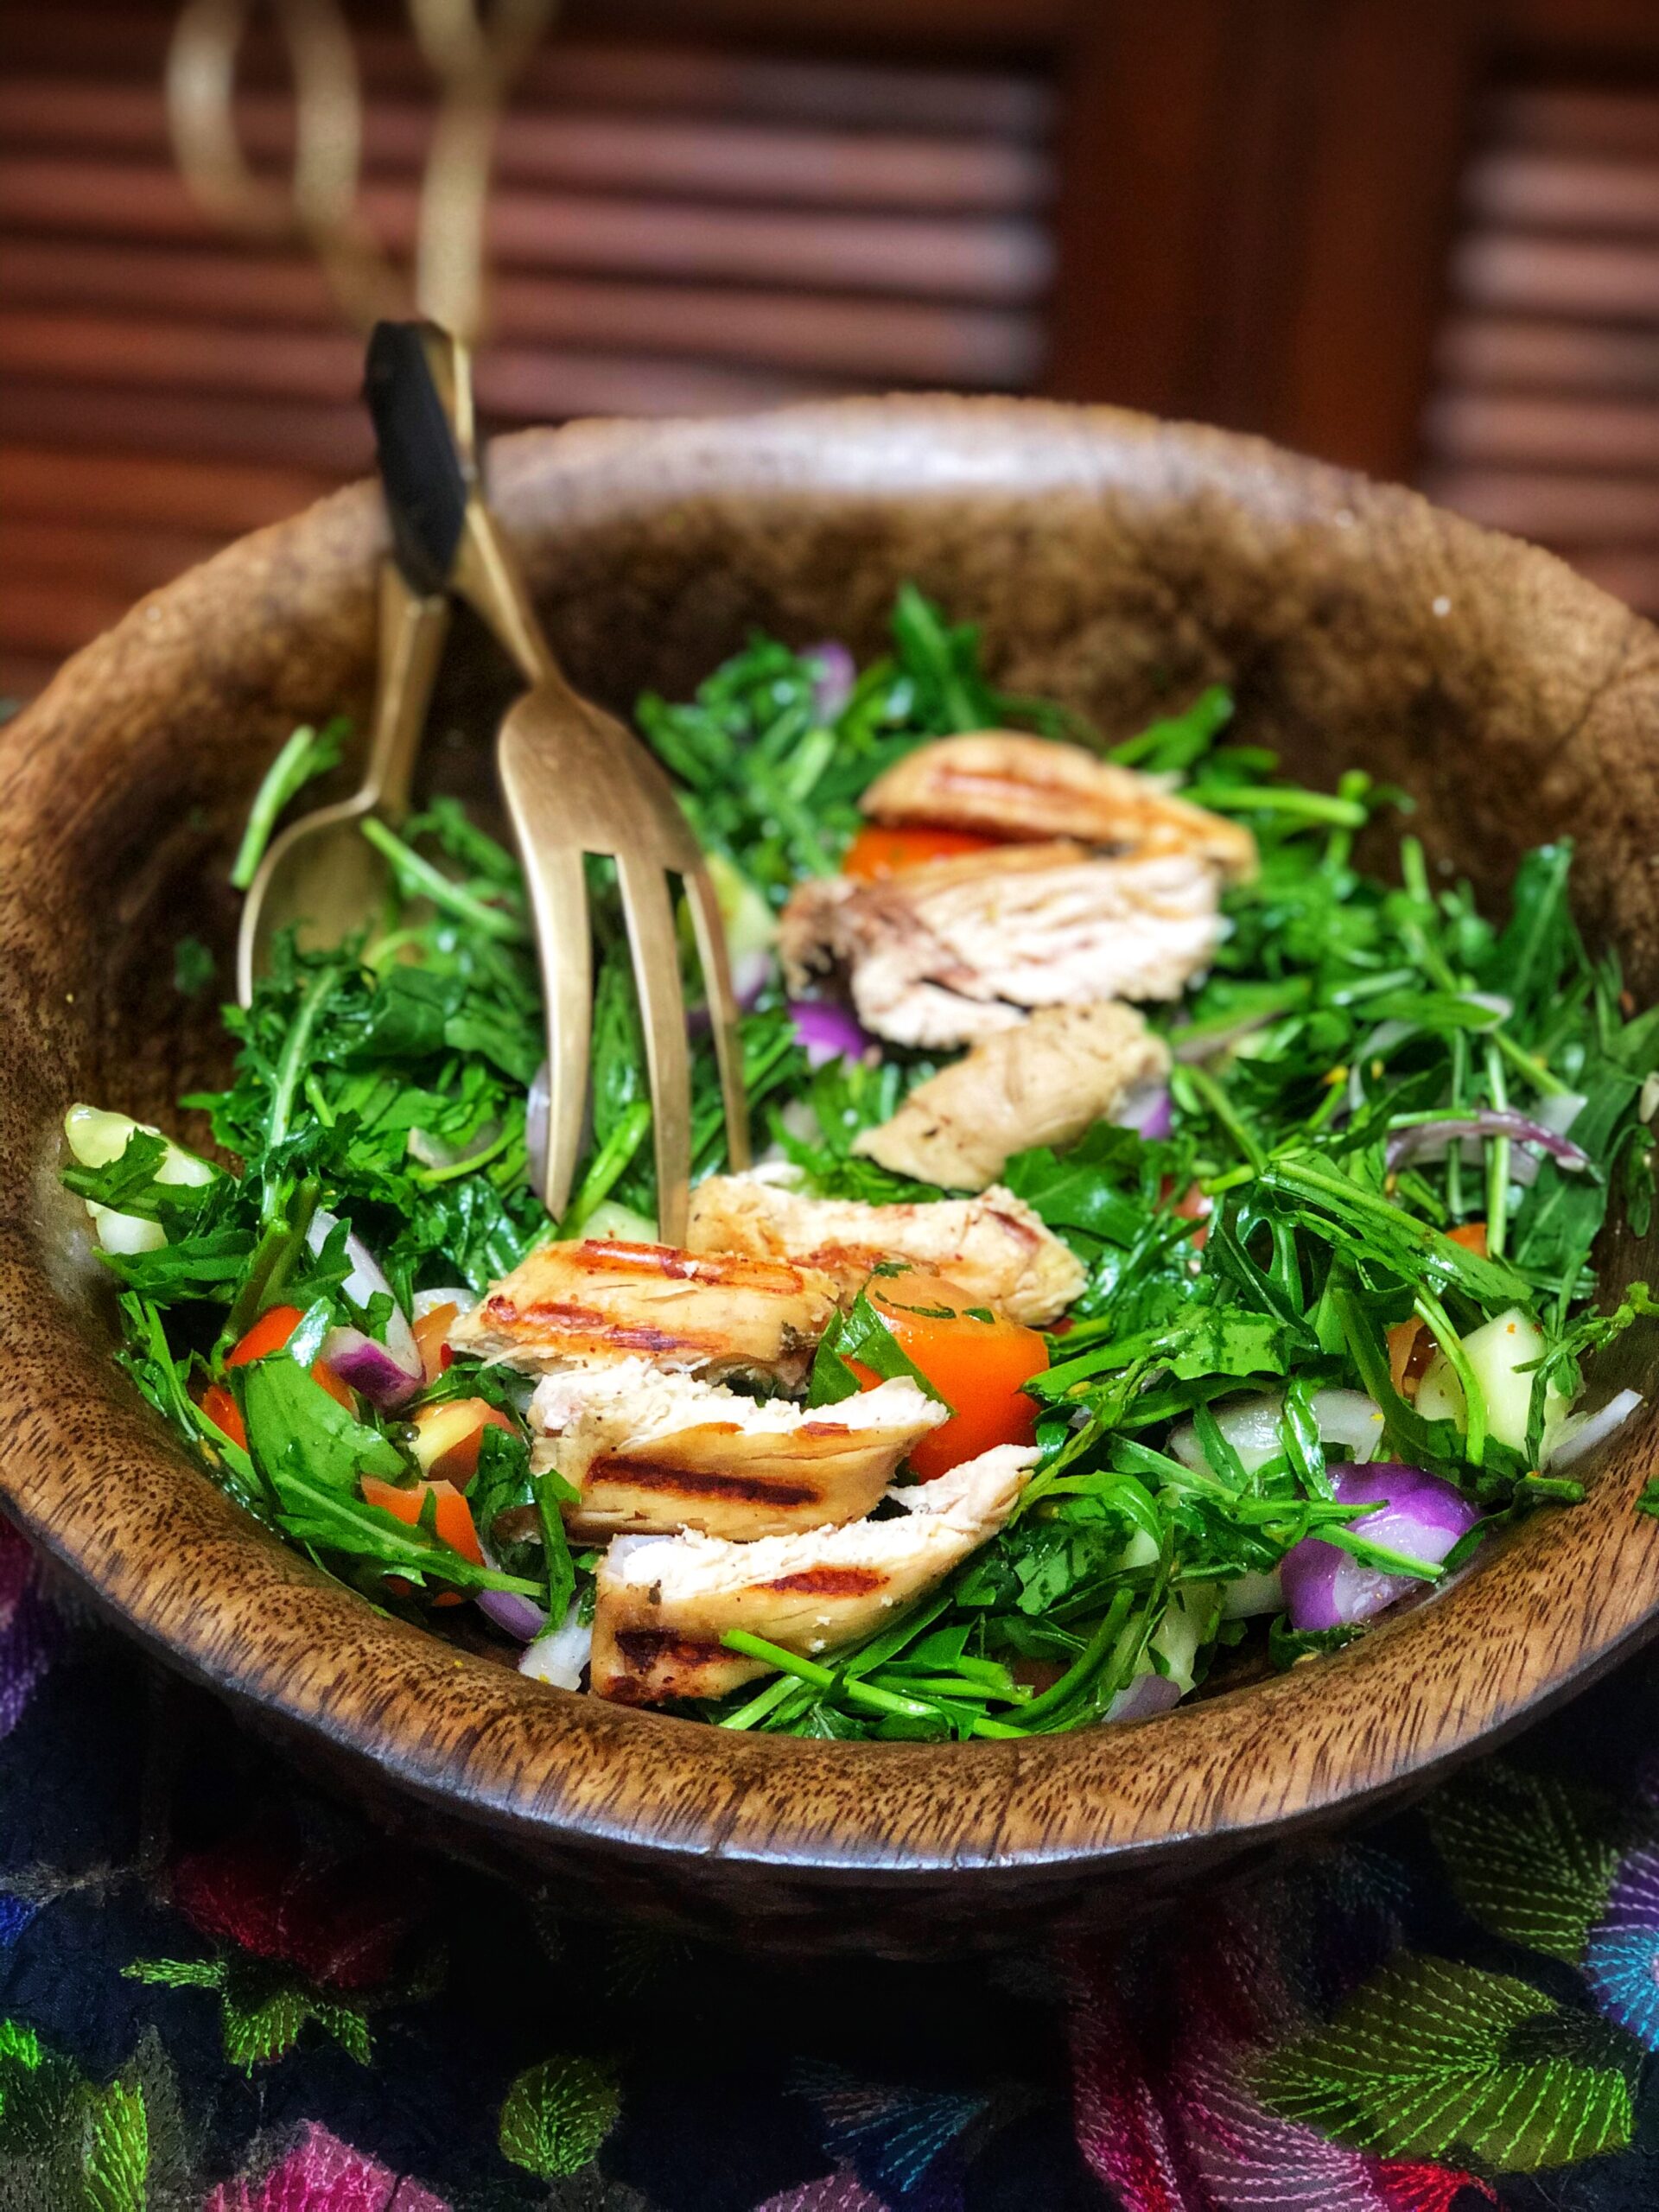 Grilled-chicken-salad-recipe-summer-salad-recipe-easy-summer-dinner-recipe-for-familyhealthy-salad-dressing-vinaigrette-arugula-leaves-marinated-grilled-chicken-3